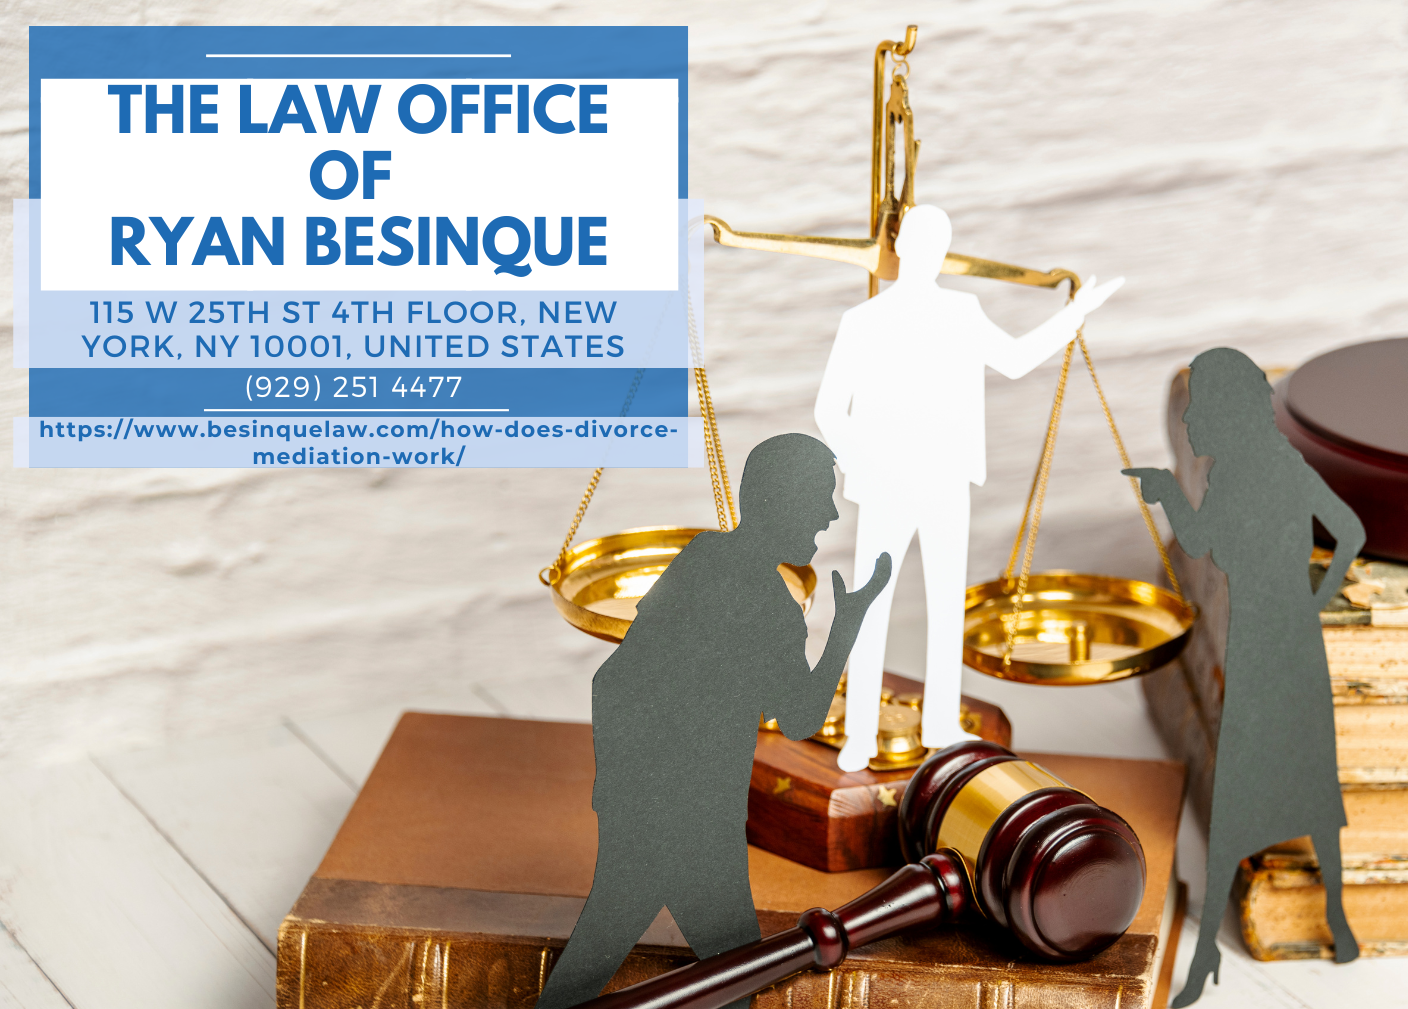 Manhattan Divorce Mediation Lawyer Ryan Besinque Releases Insightful Article on How Divorce Mediation Works